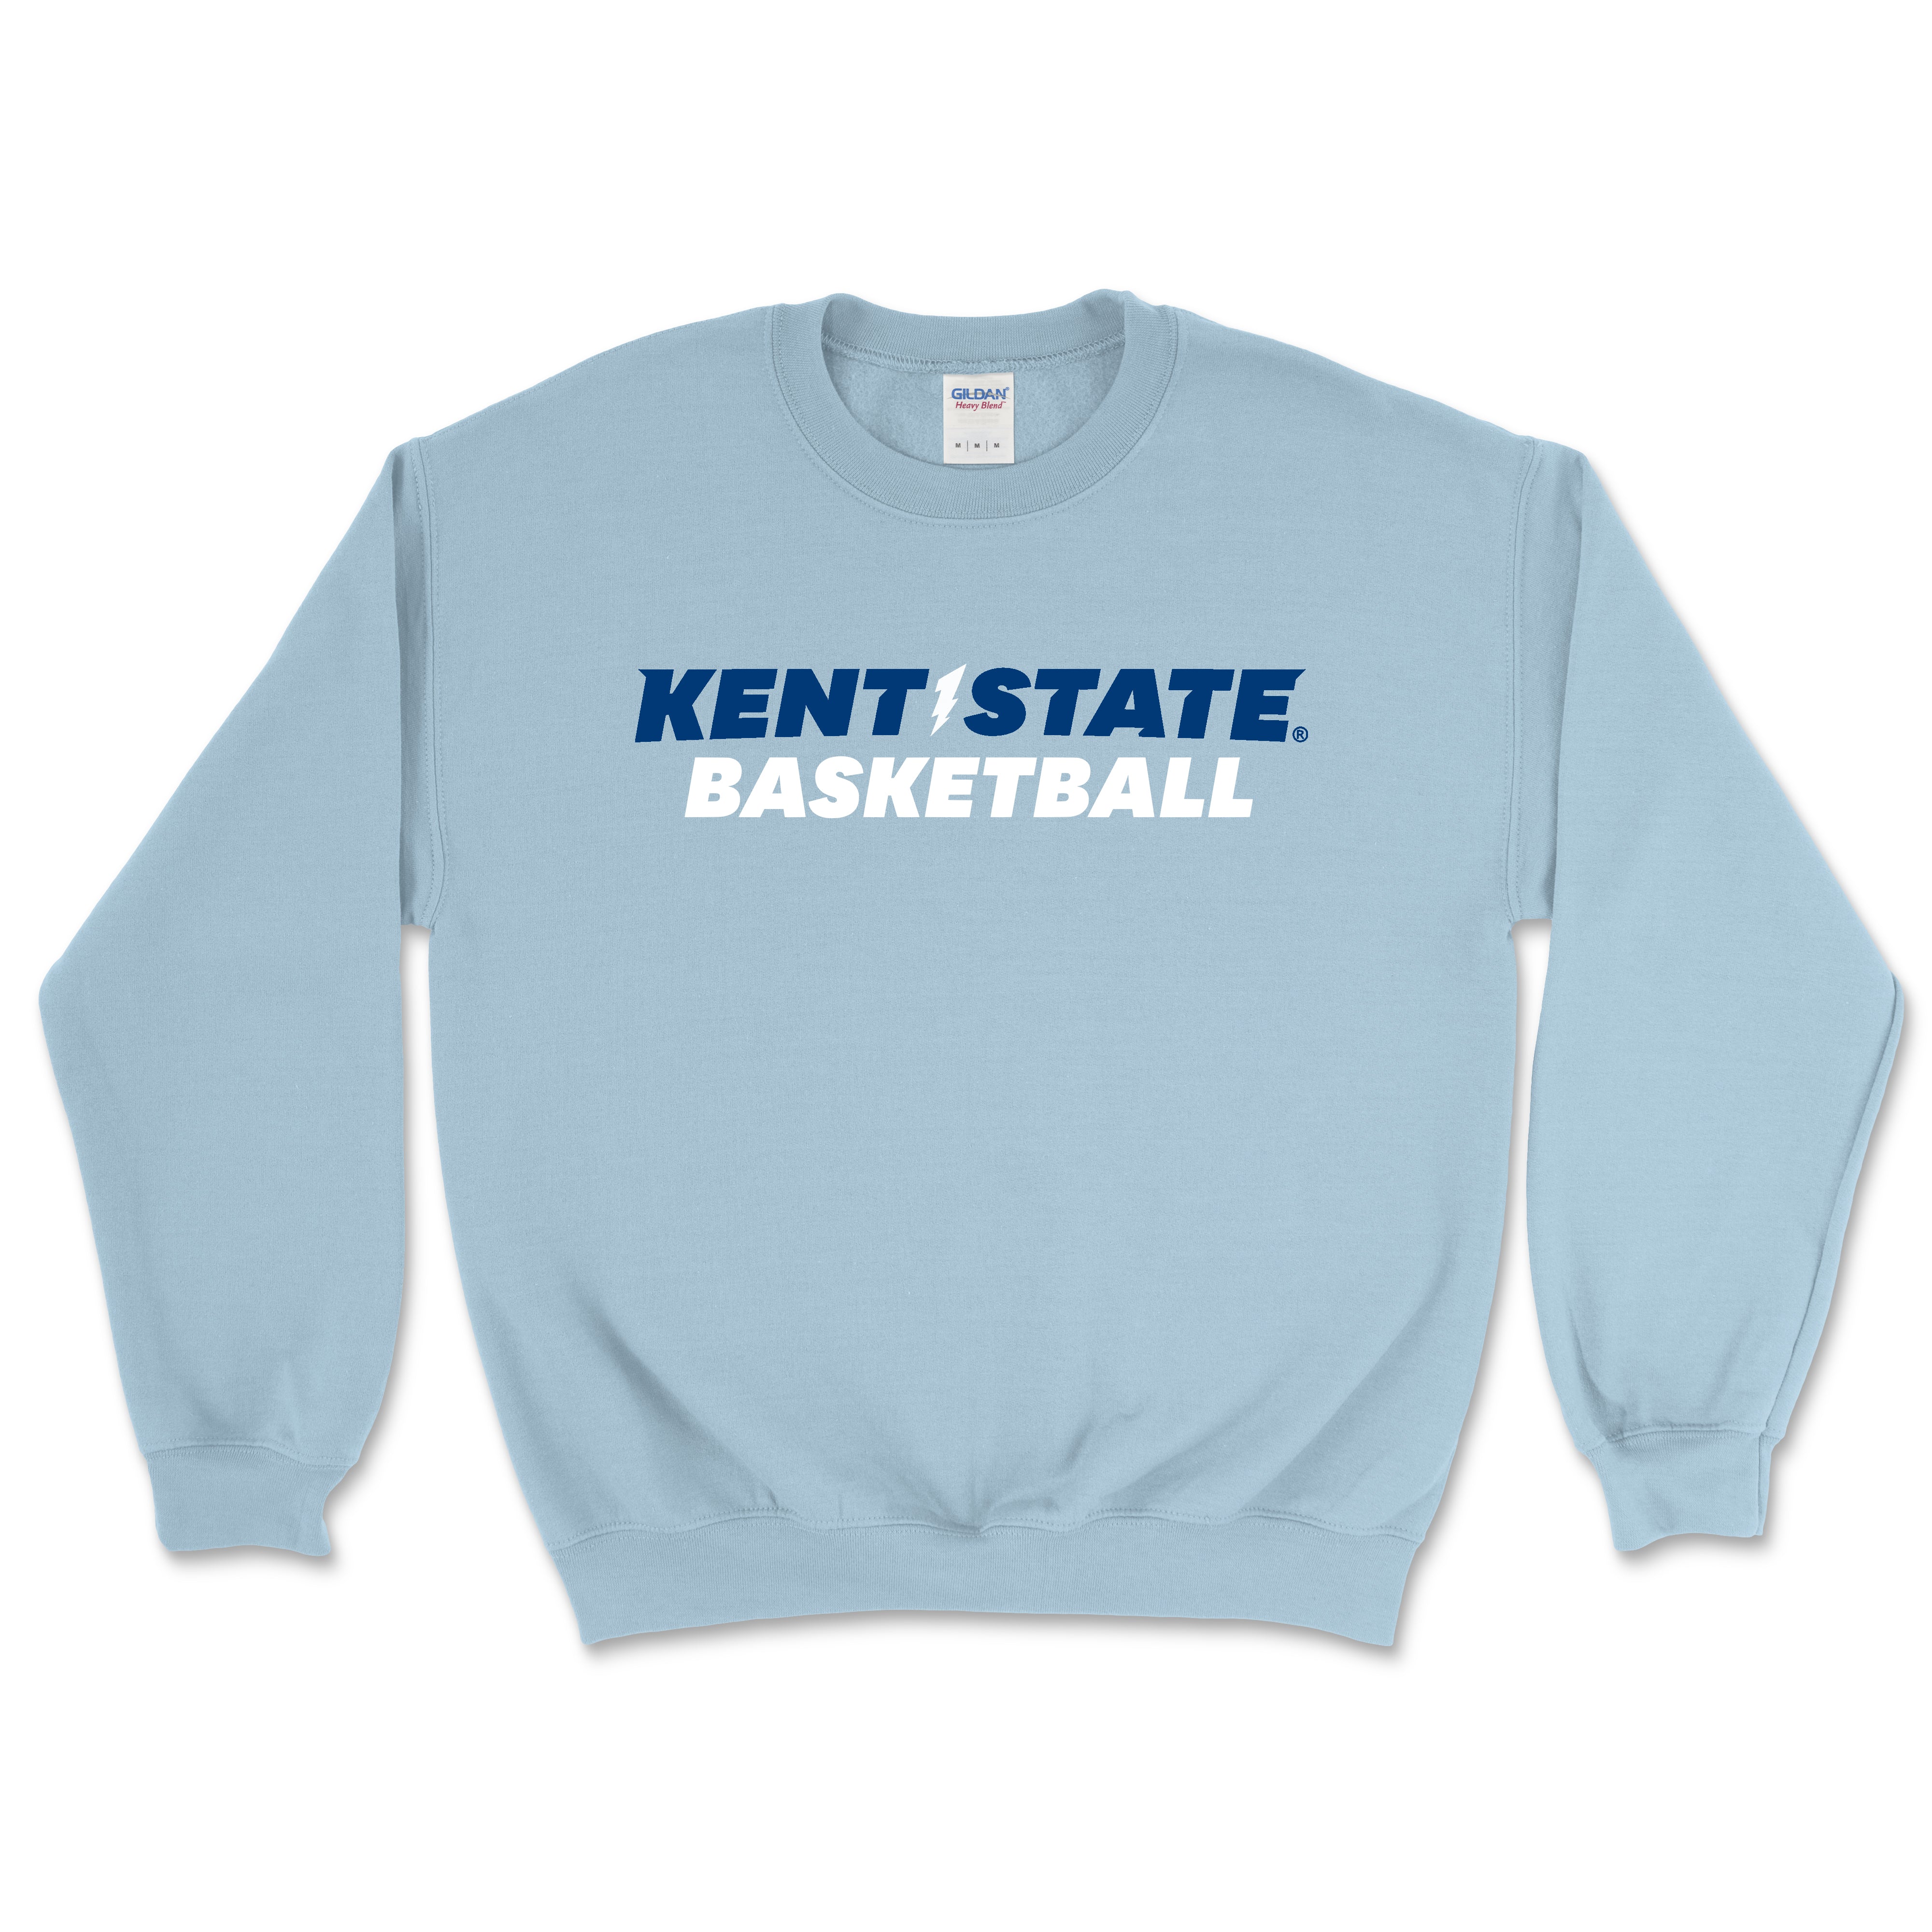 Kent State Light Blue Basketball Crewneck Sweatshirt